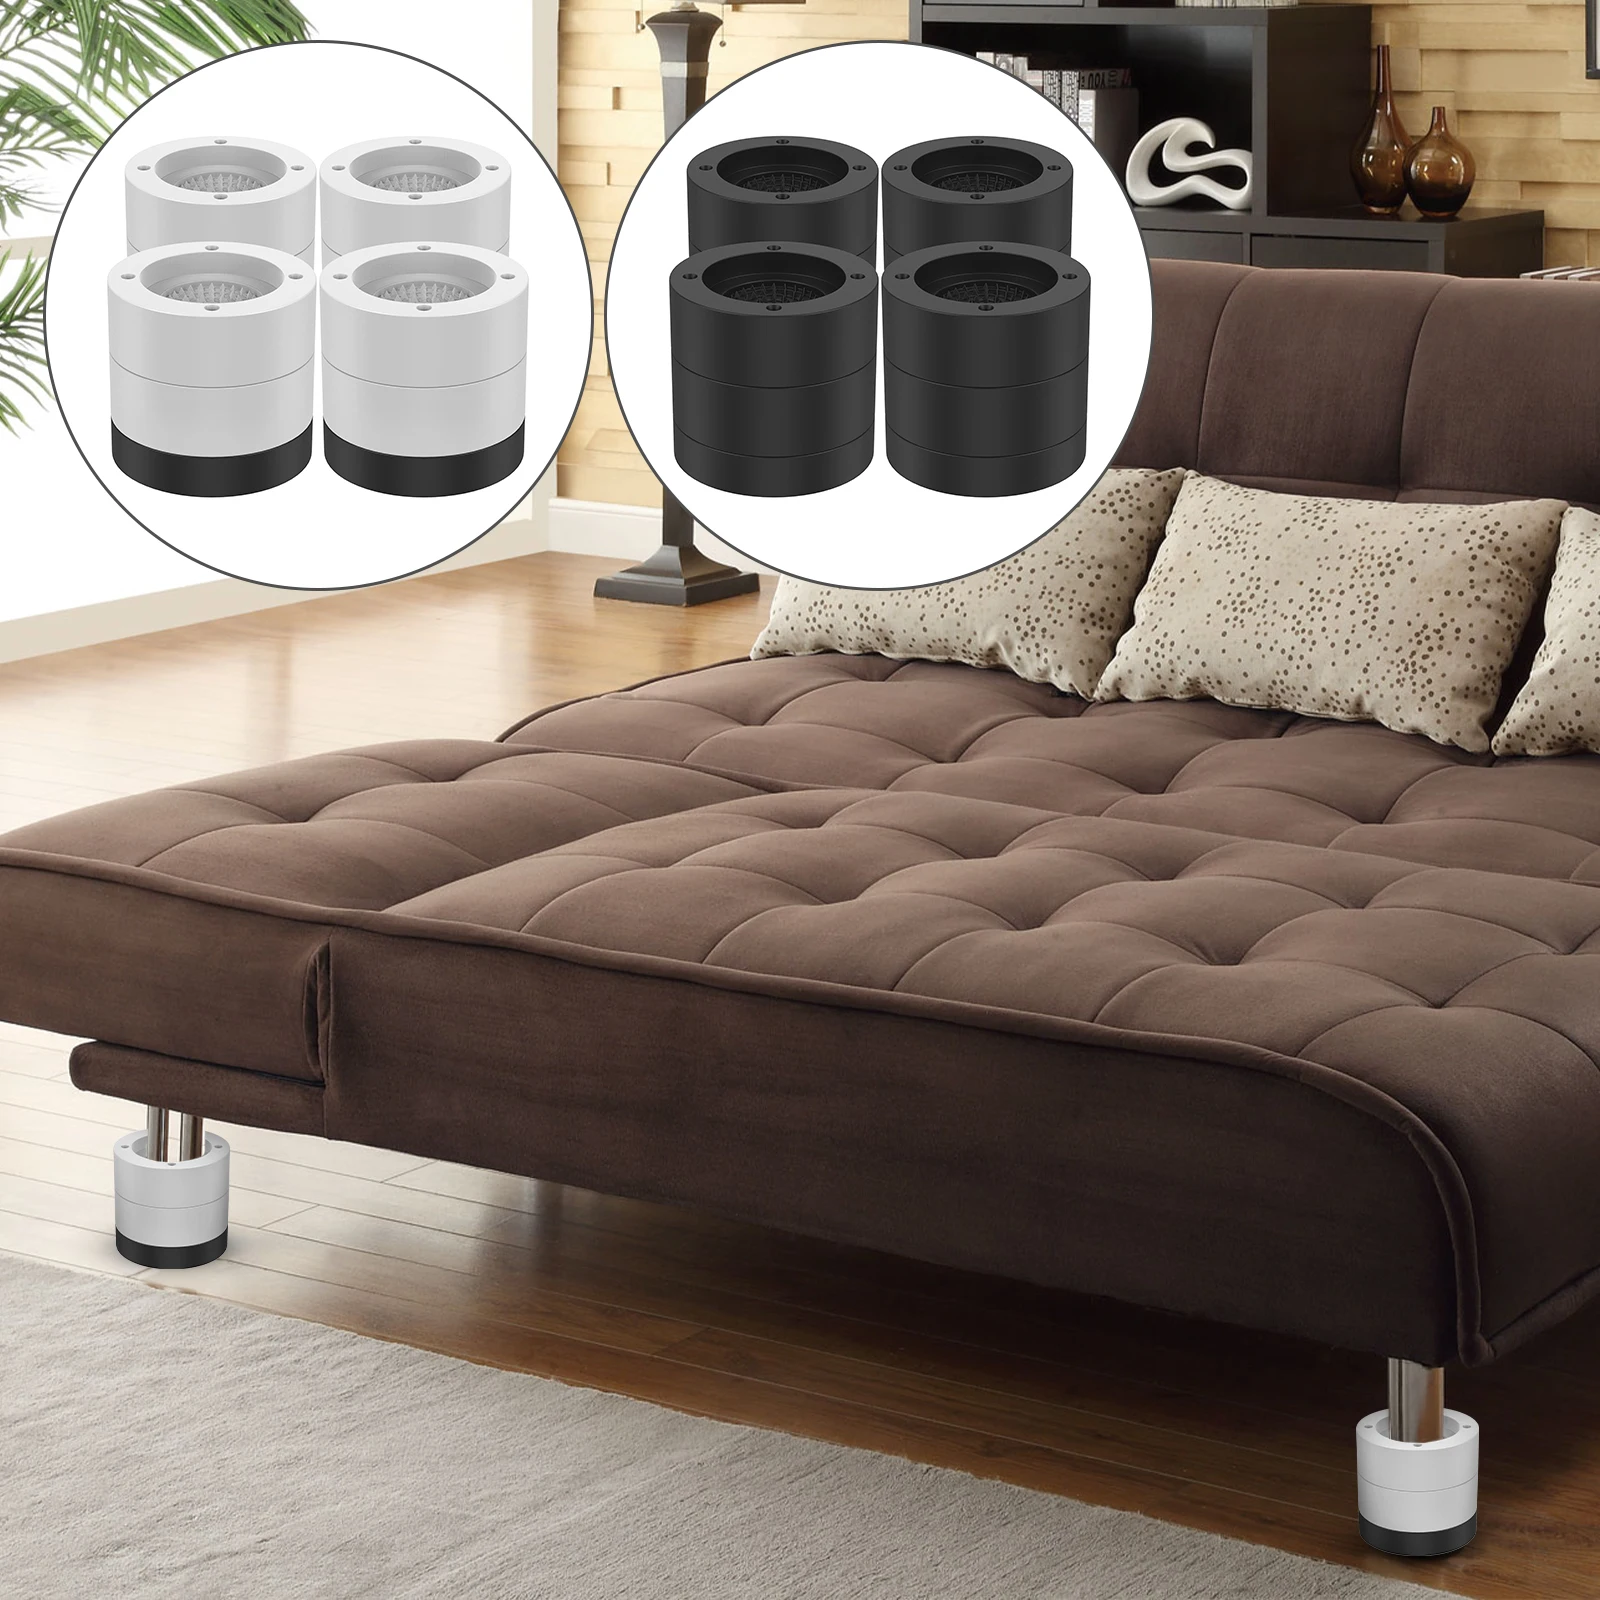 4pcs-round-furniture-riser-heavy-duty-bed-chair-riser-support-1300lb-anti-slip-washing-machine-desk-couch-bottom-elevator